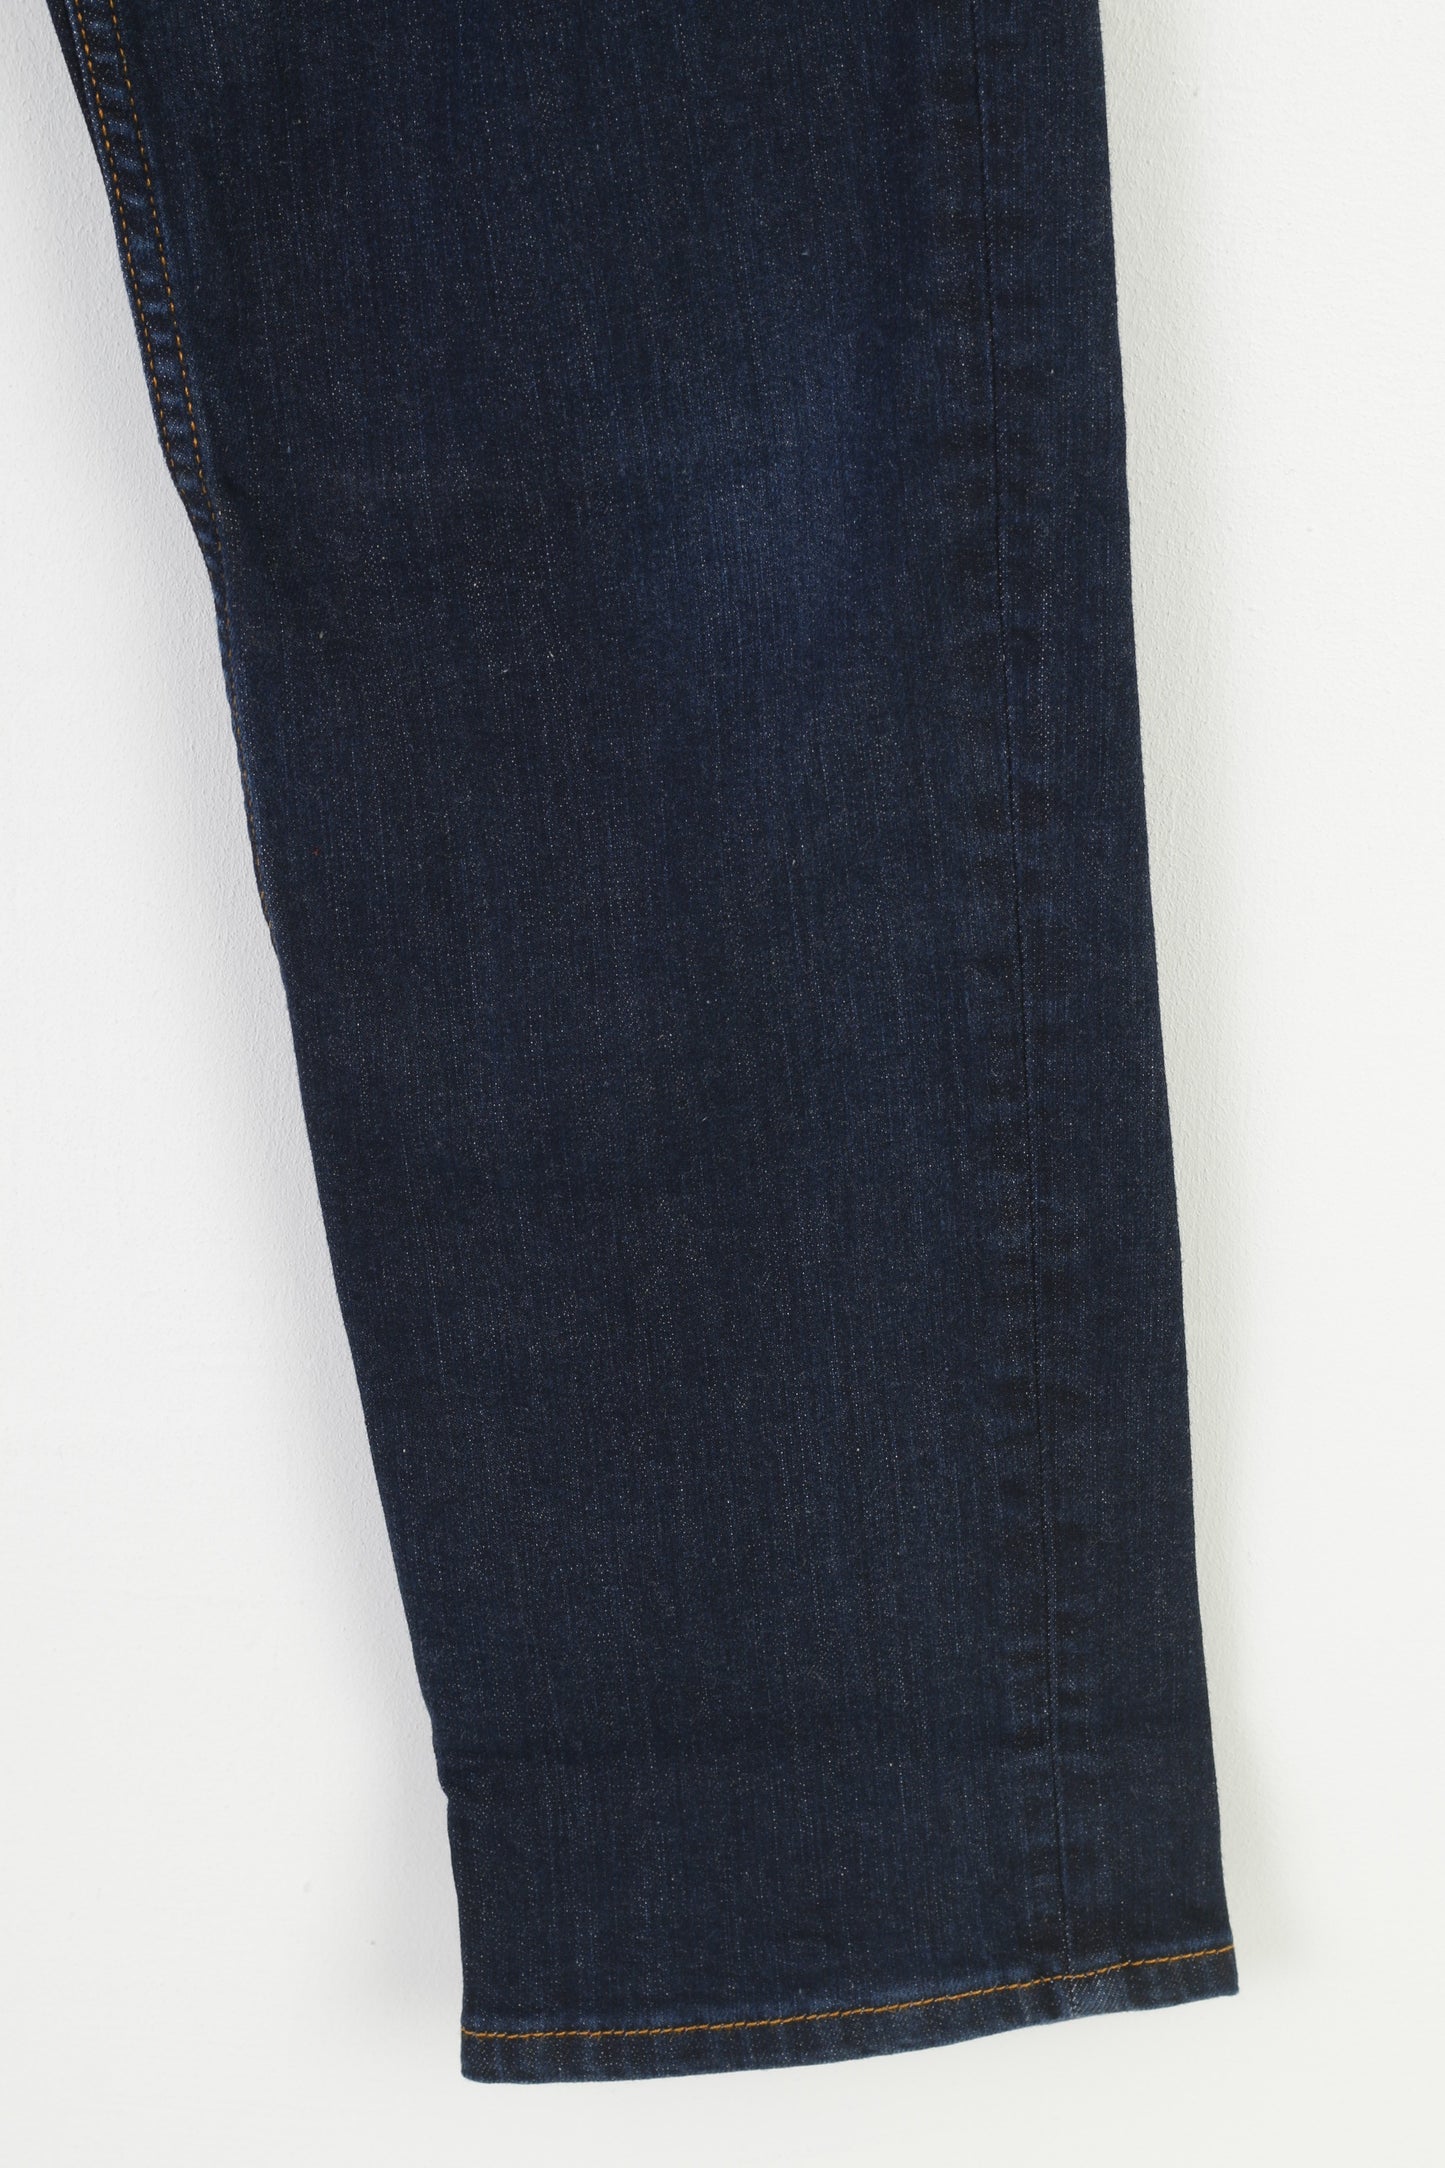 Henri Lloyd Pantaloni jeans da donna 30 Pantaloni vintage a gamba dritta in cotone blu scuro 